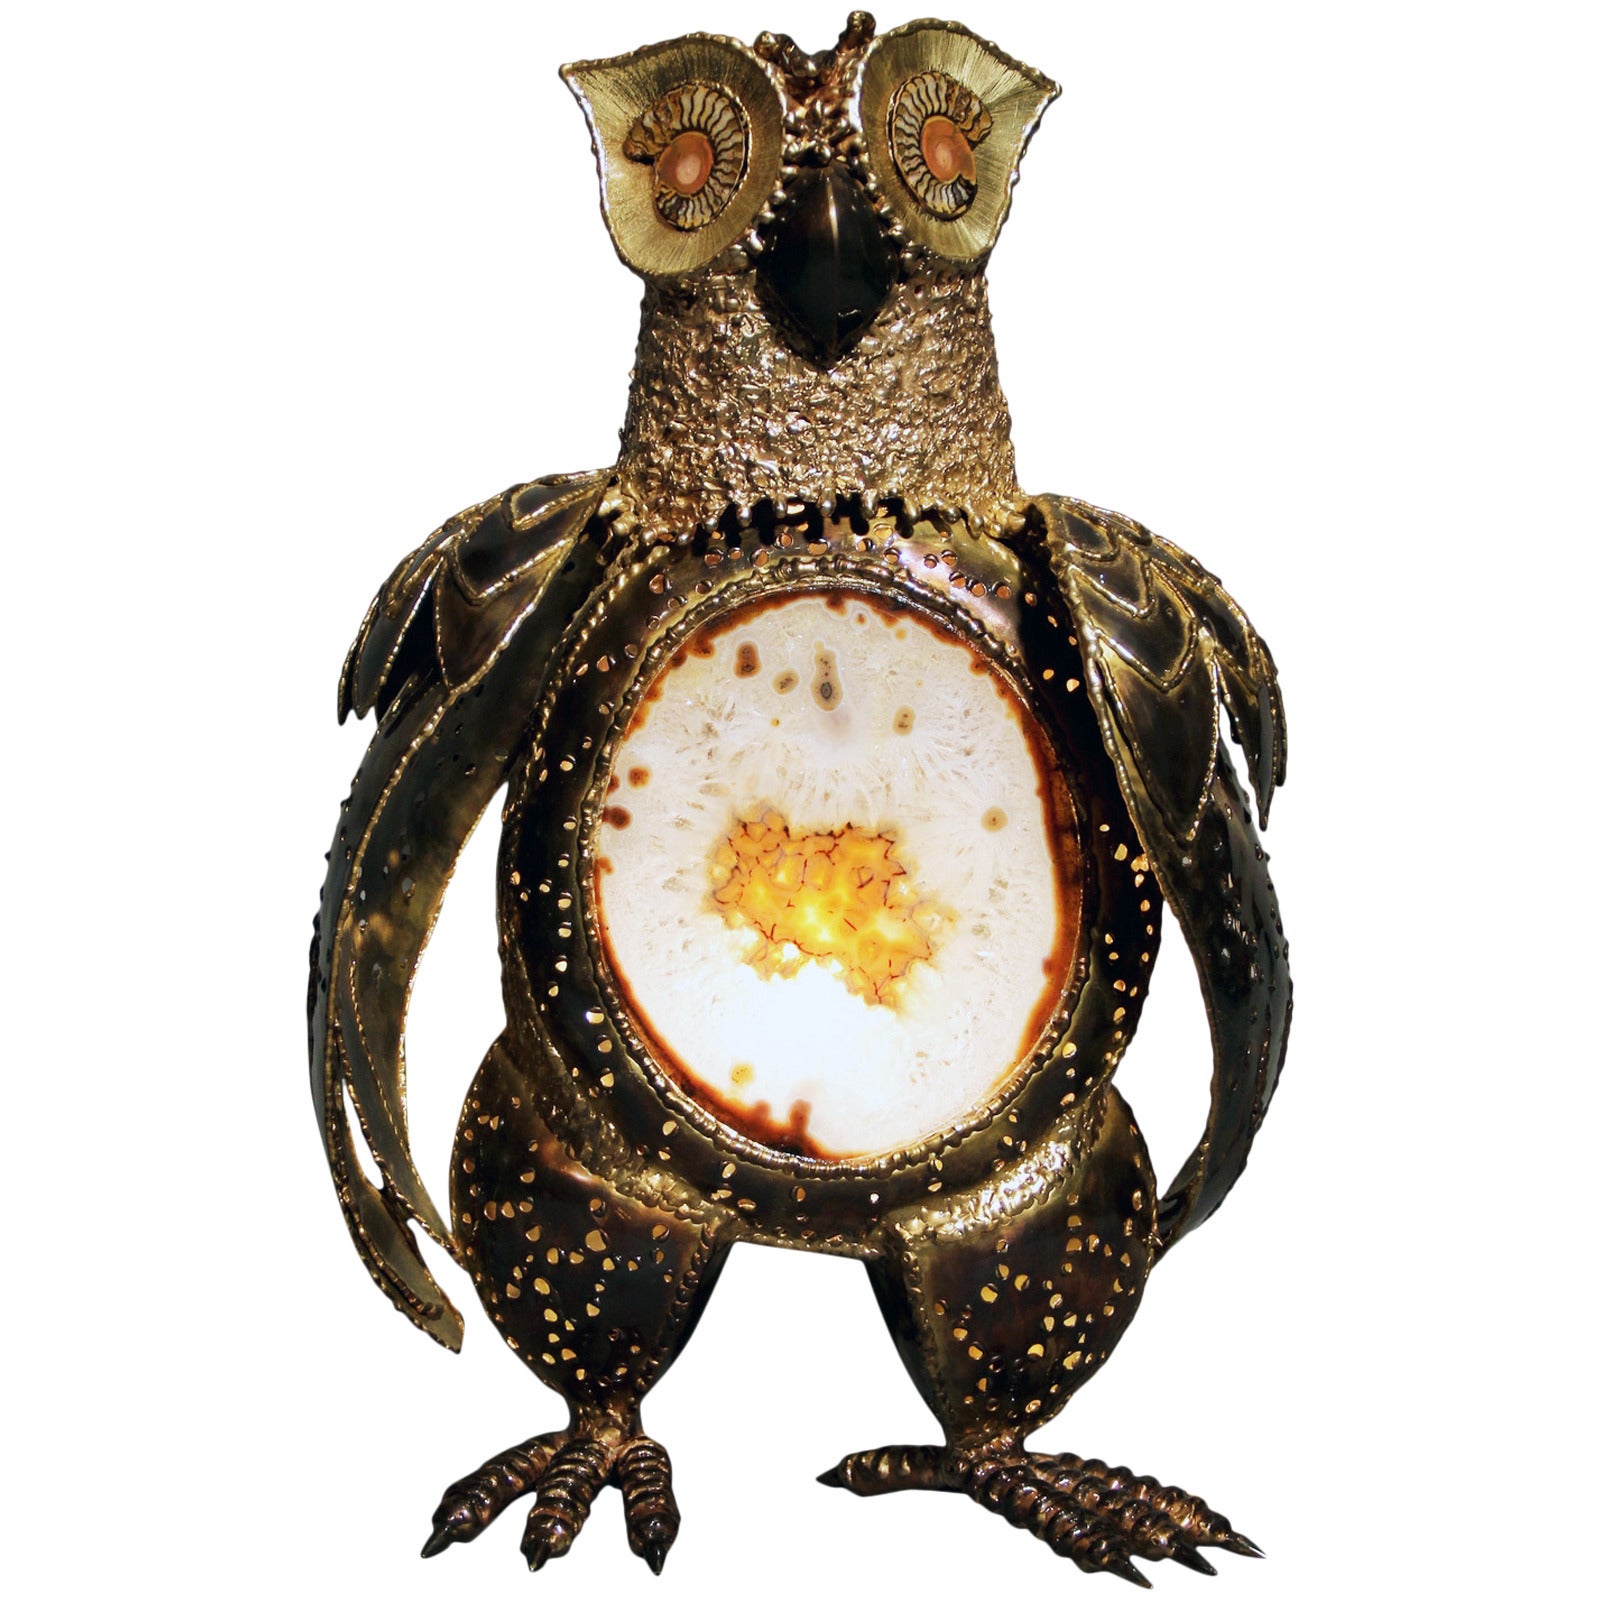 Luminous Sculpture "Owl" by Richard Faure For Sale